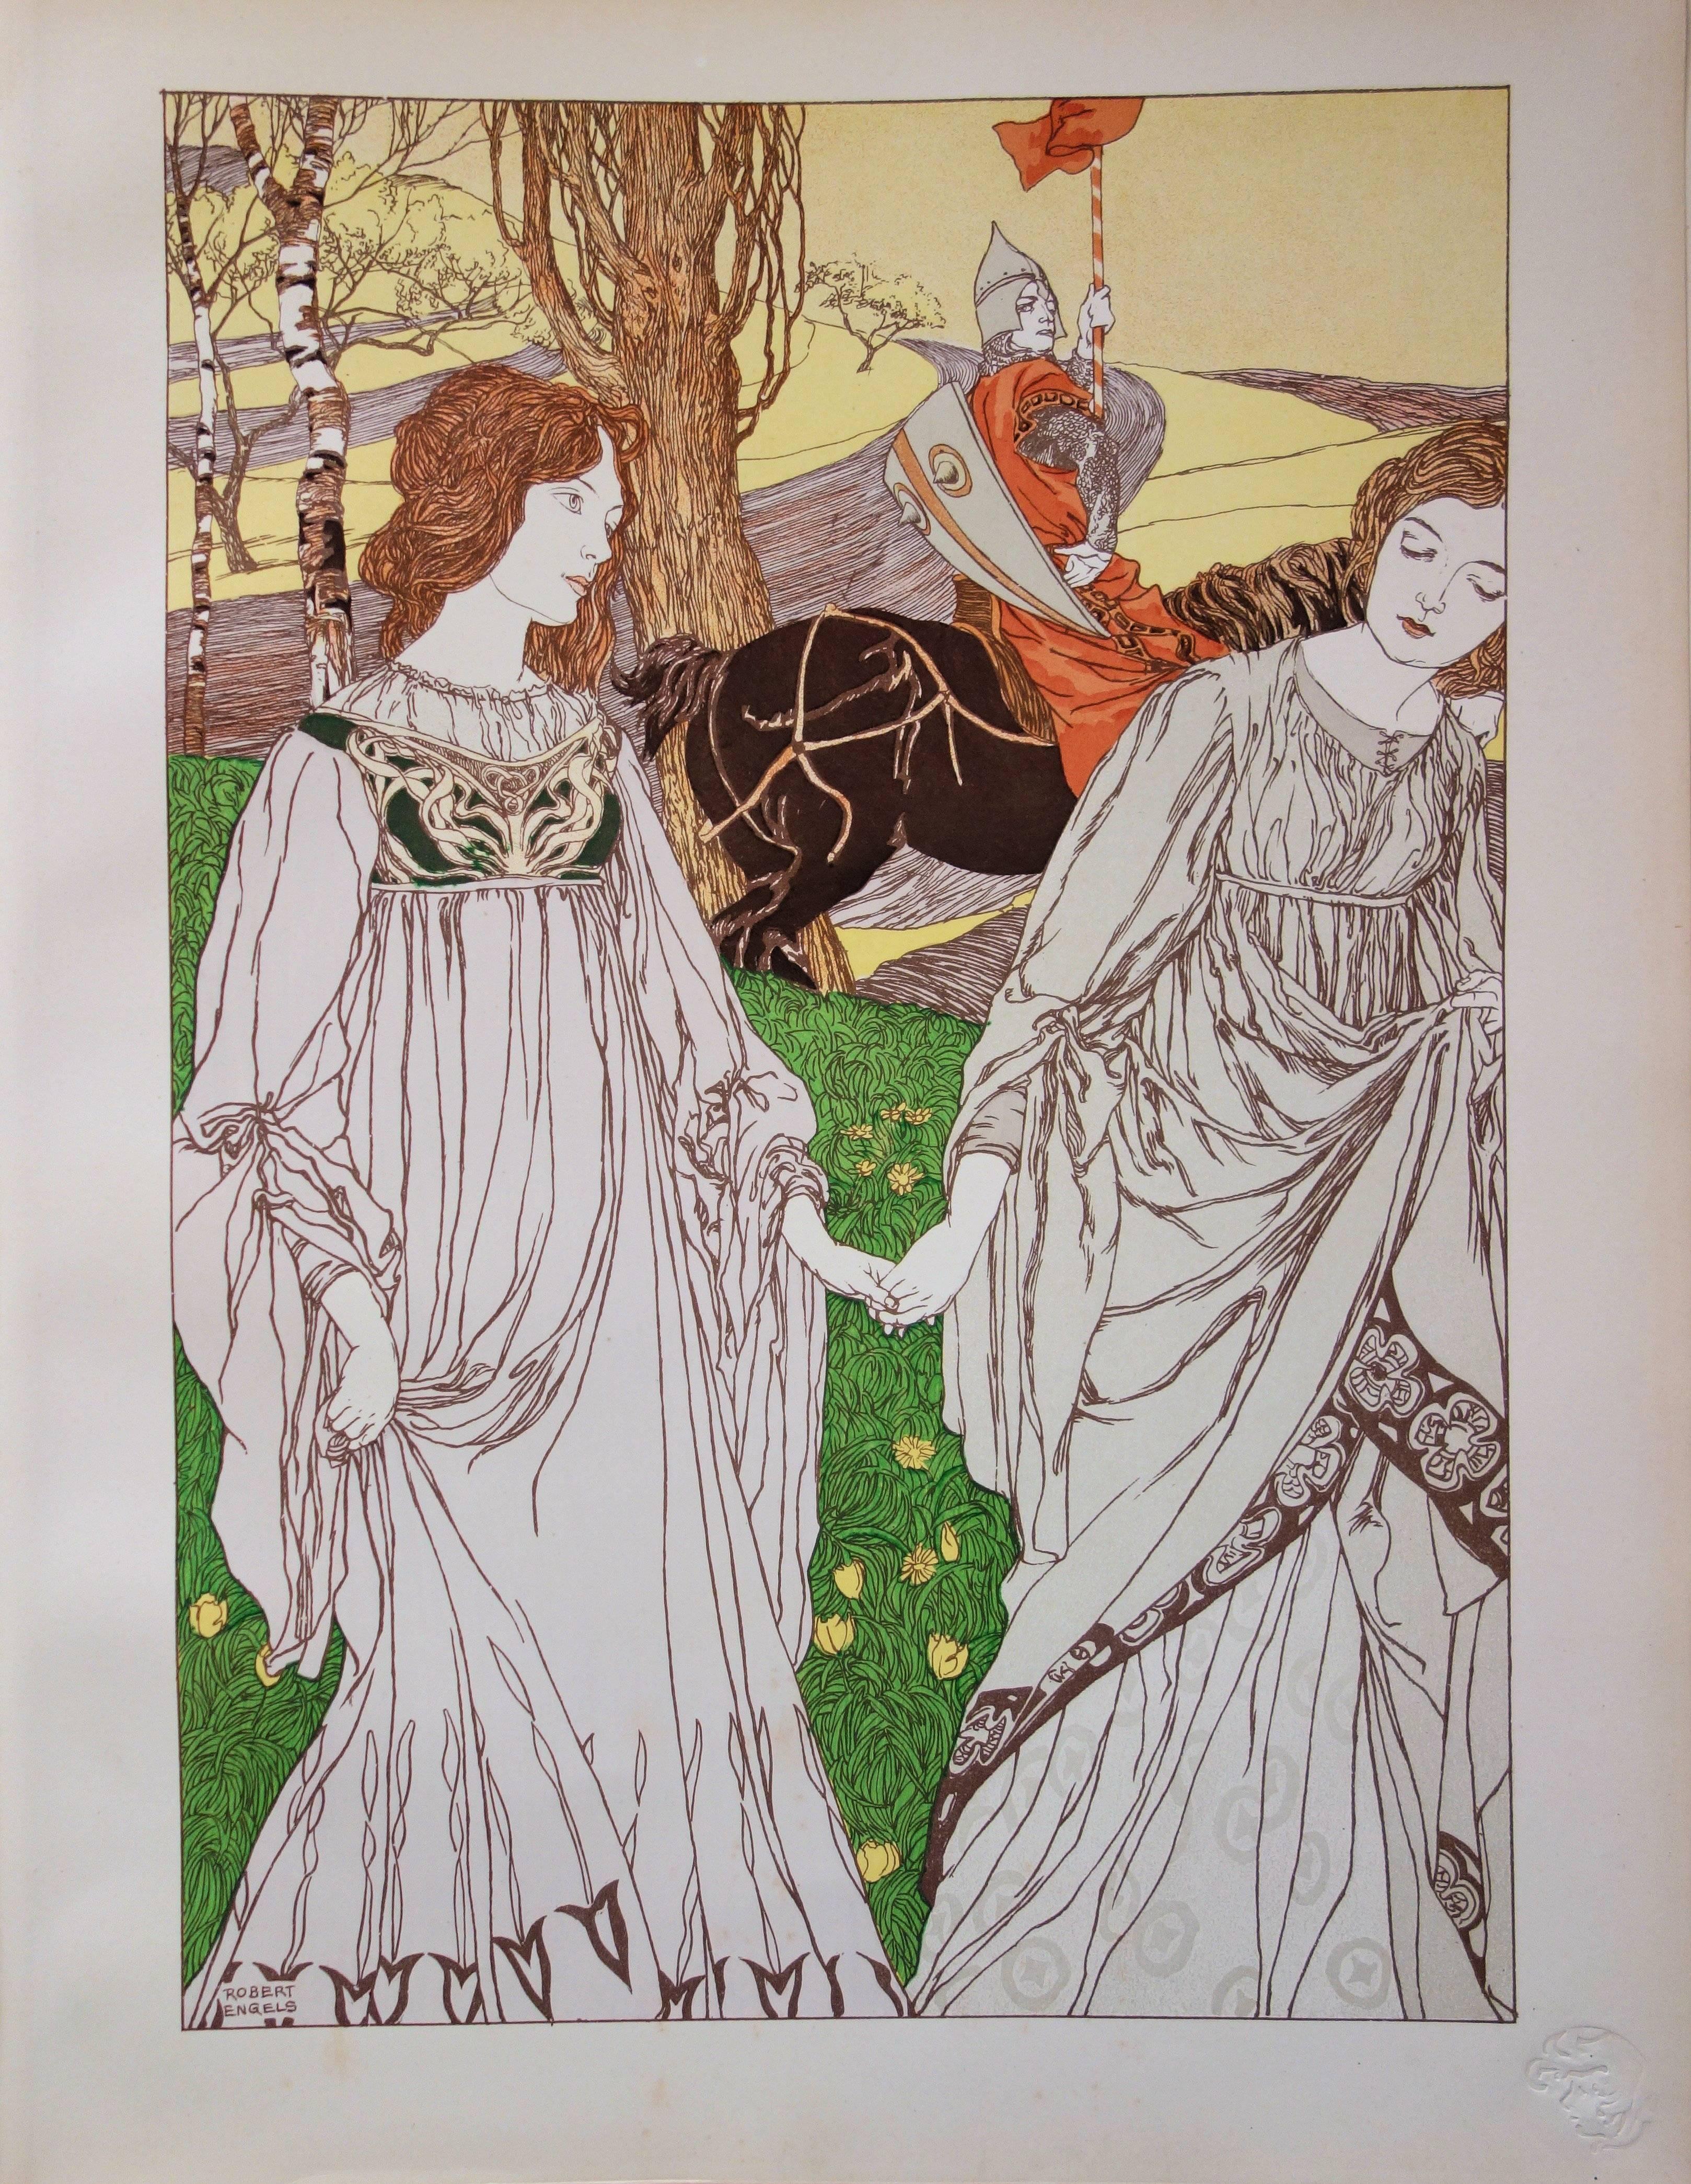 Robert Engels Figurative Print - Two Women and a Knight - Original lithograph (1897/98)